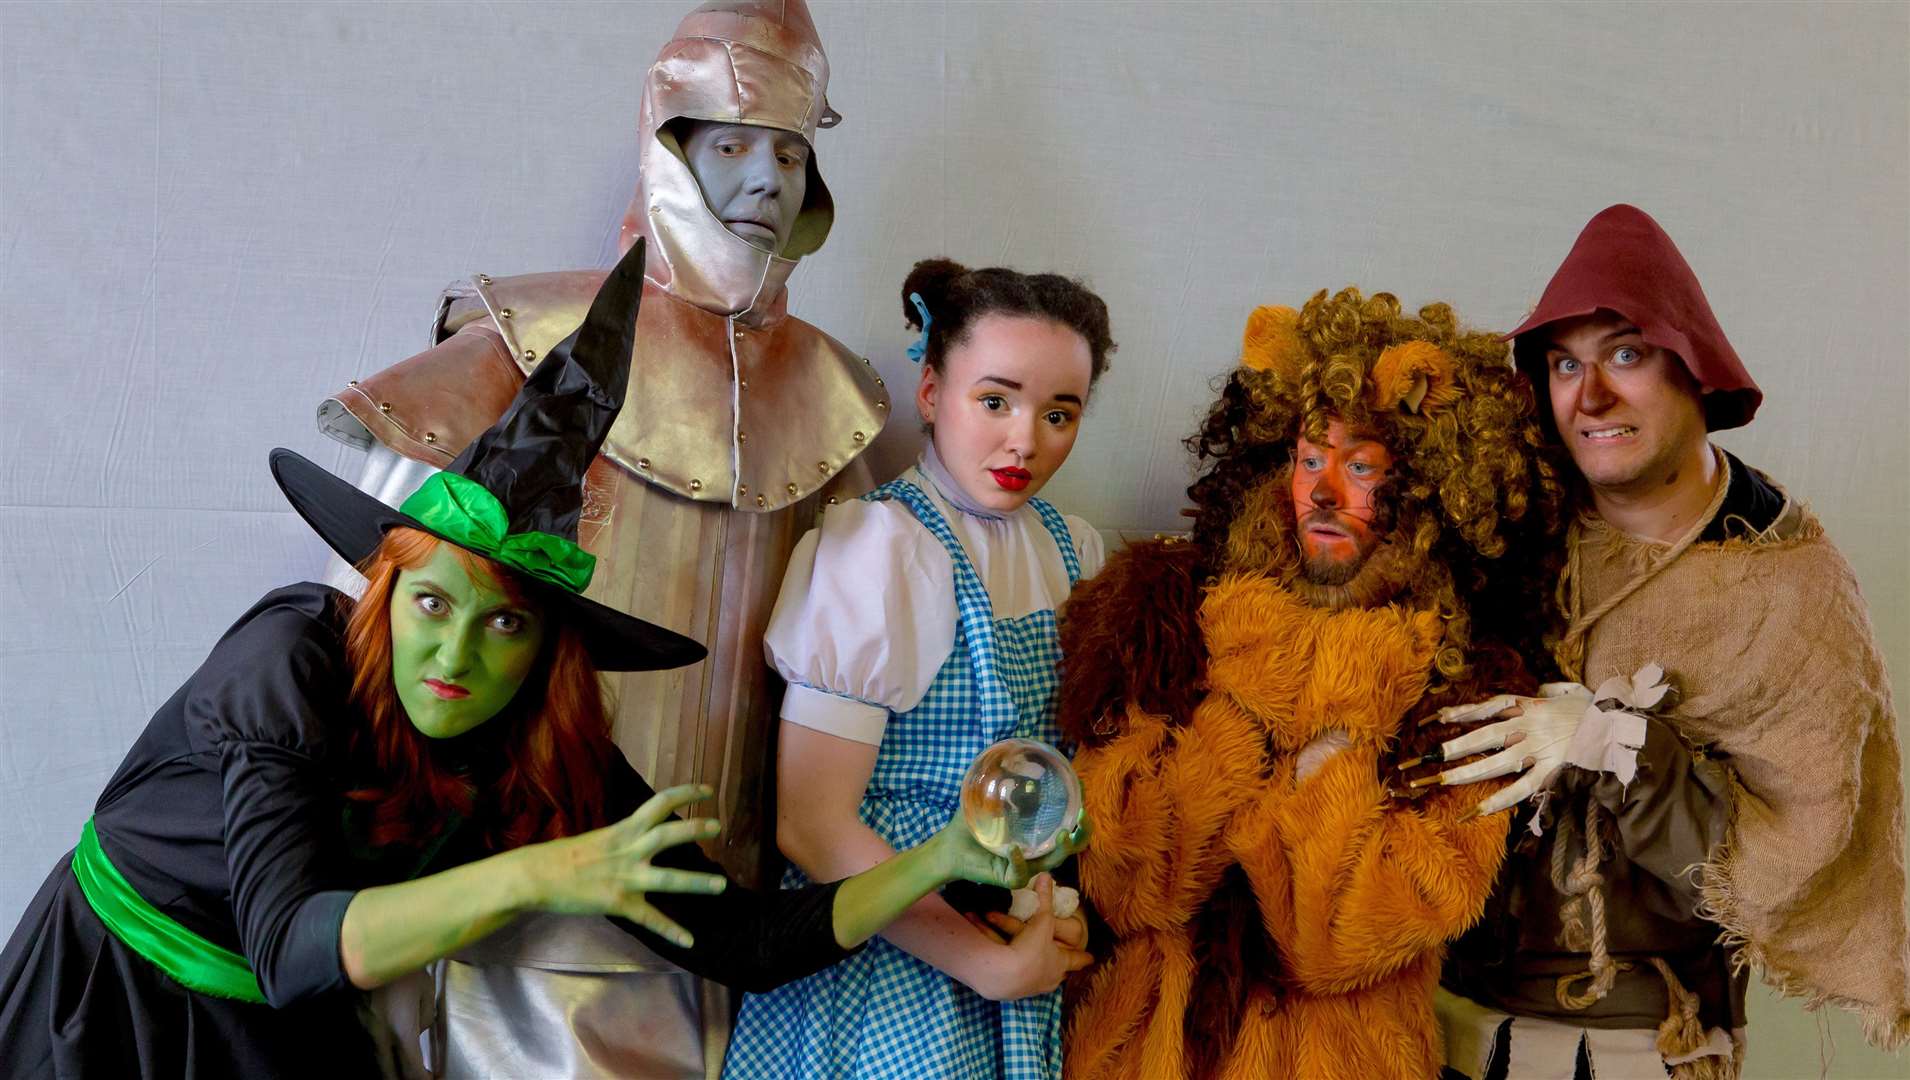 Wizard of Oz is back at Groombridge Place near Tunbridge Wells